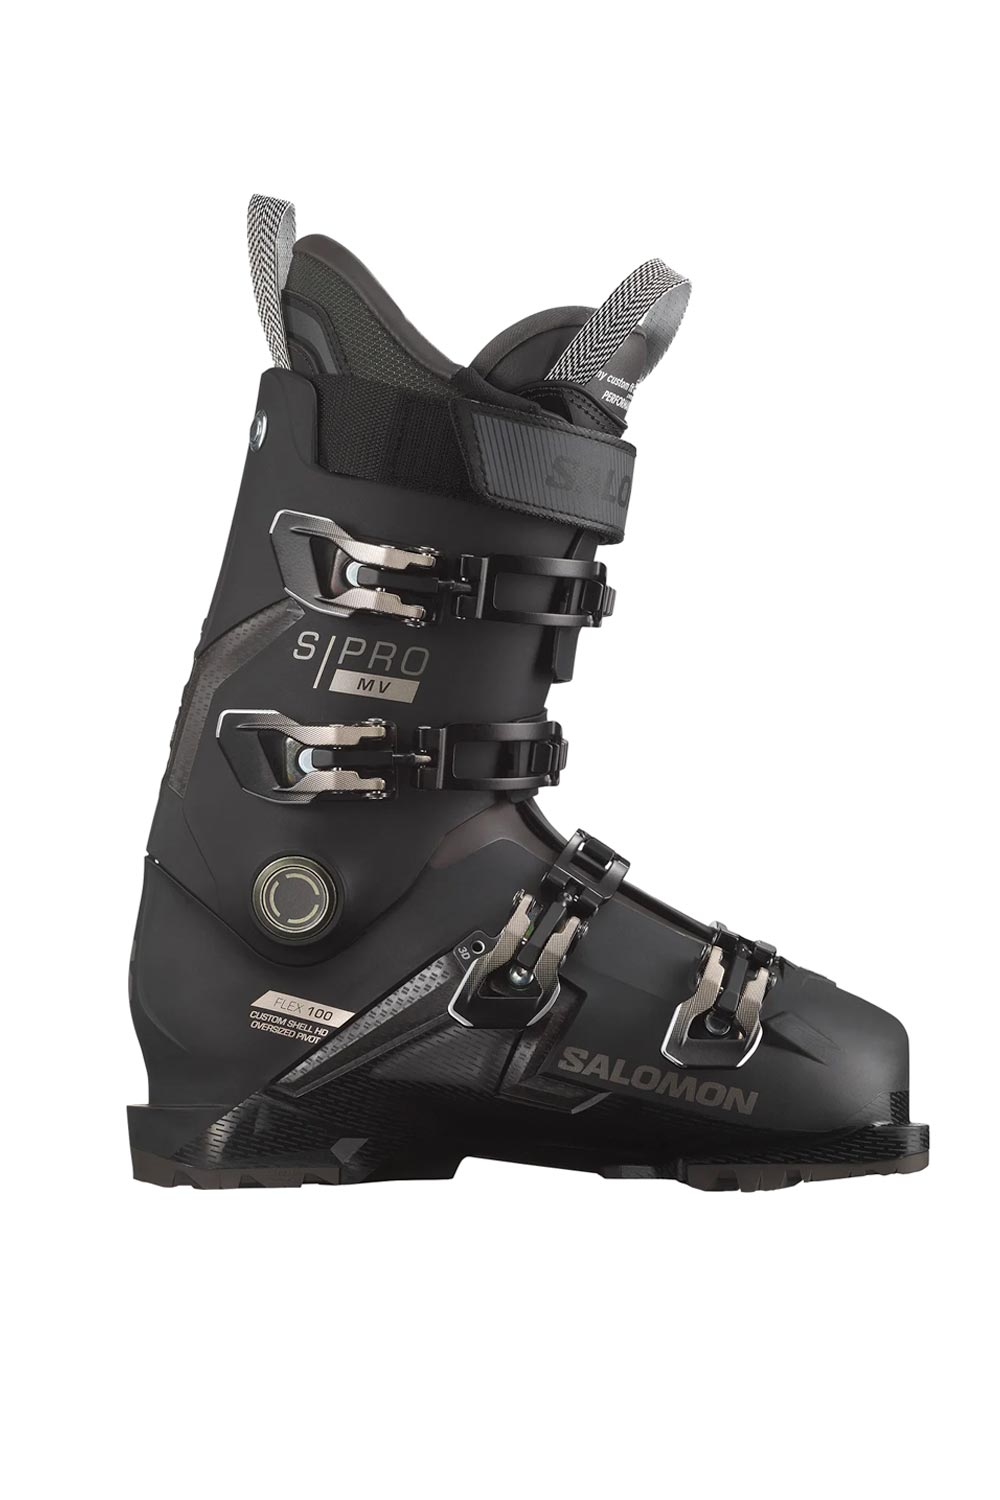 men's Salomon SPro 100 ski boots, black with metallic accents